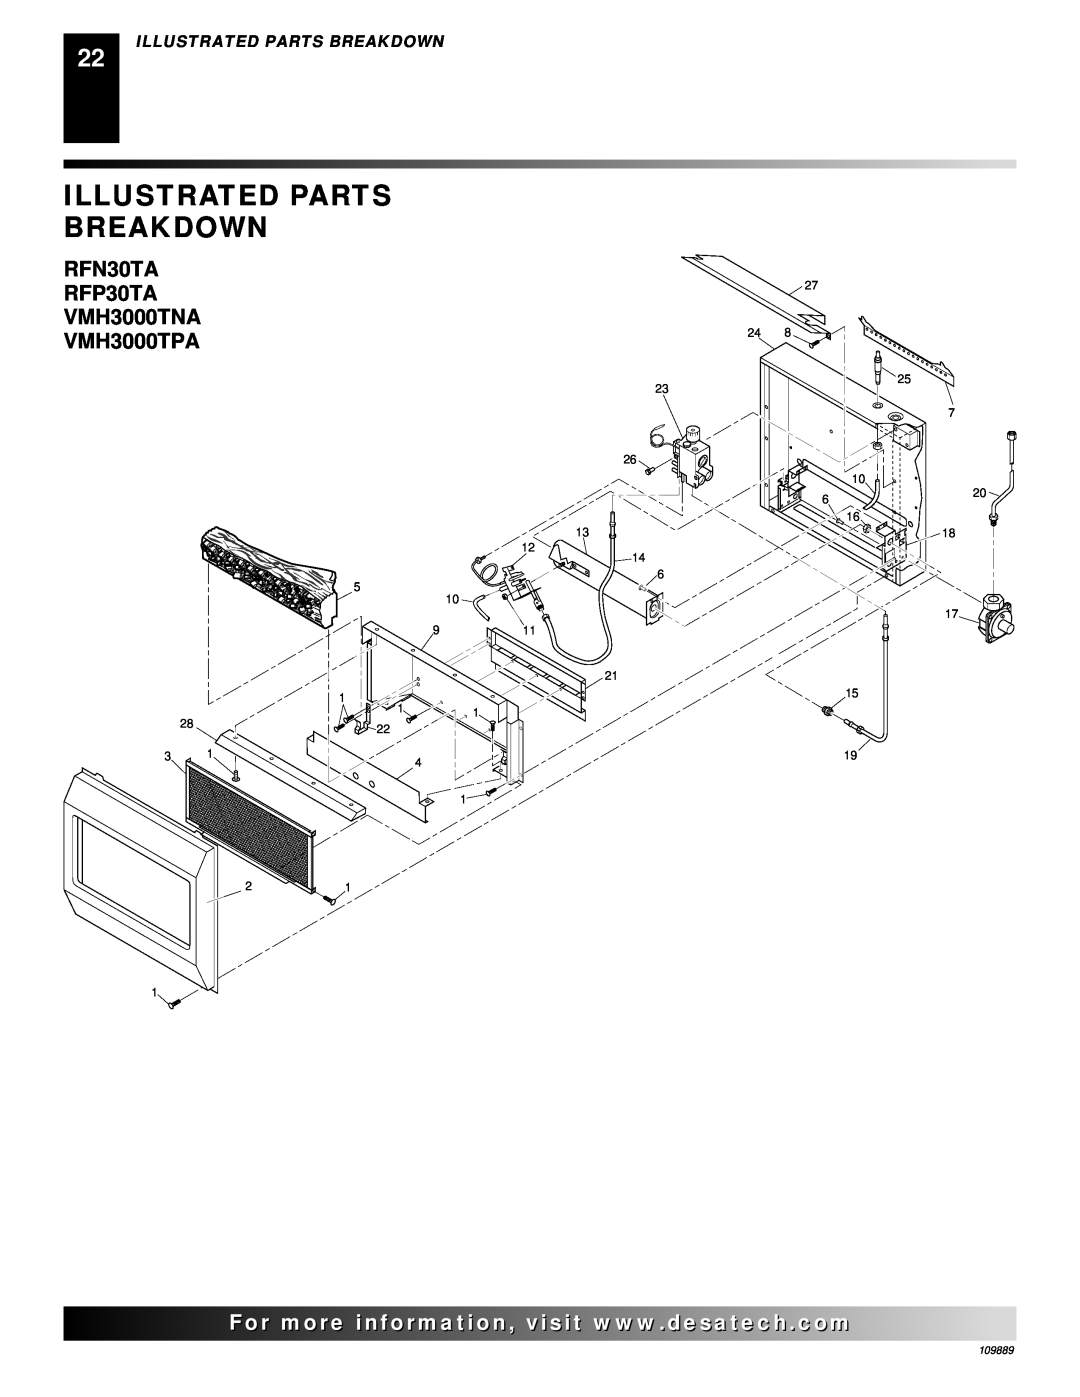 Desa installation manual Illustrated Parts Breakdown, RFN30TA RFP30TA VMH3000TNA VMH3000TPA 